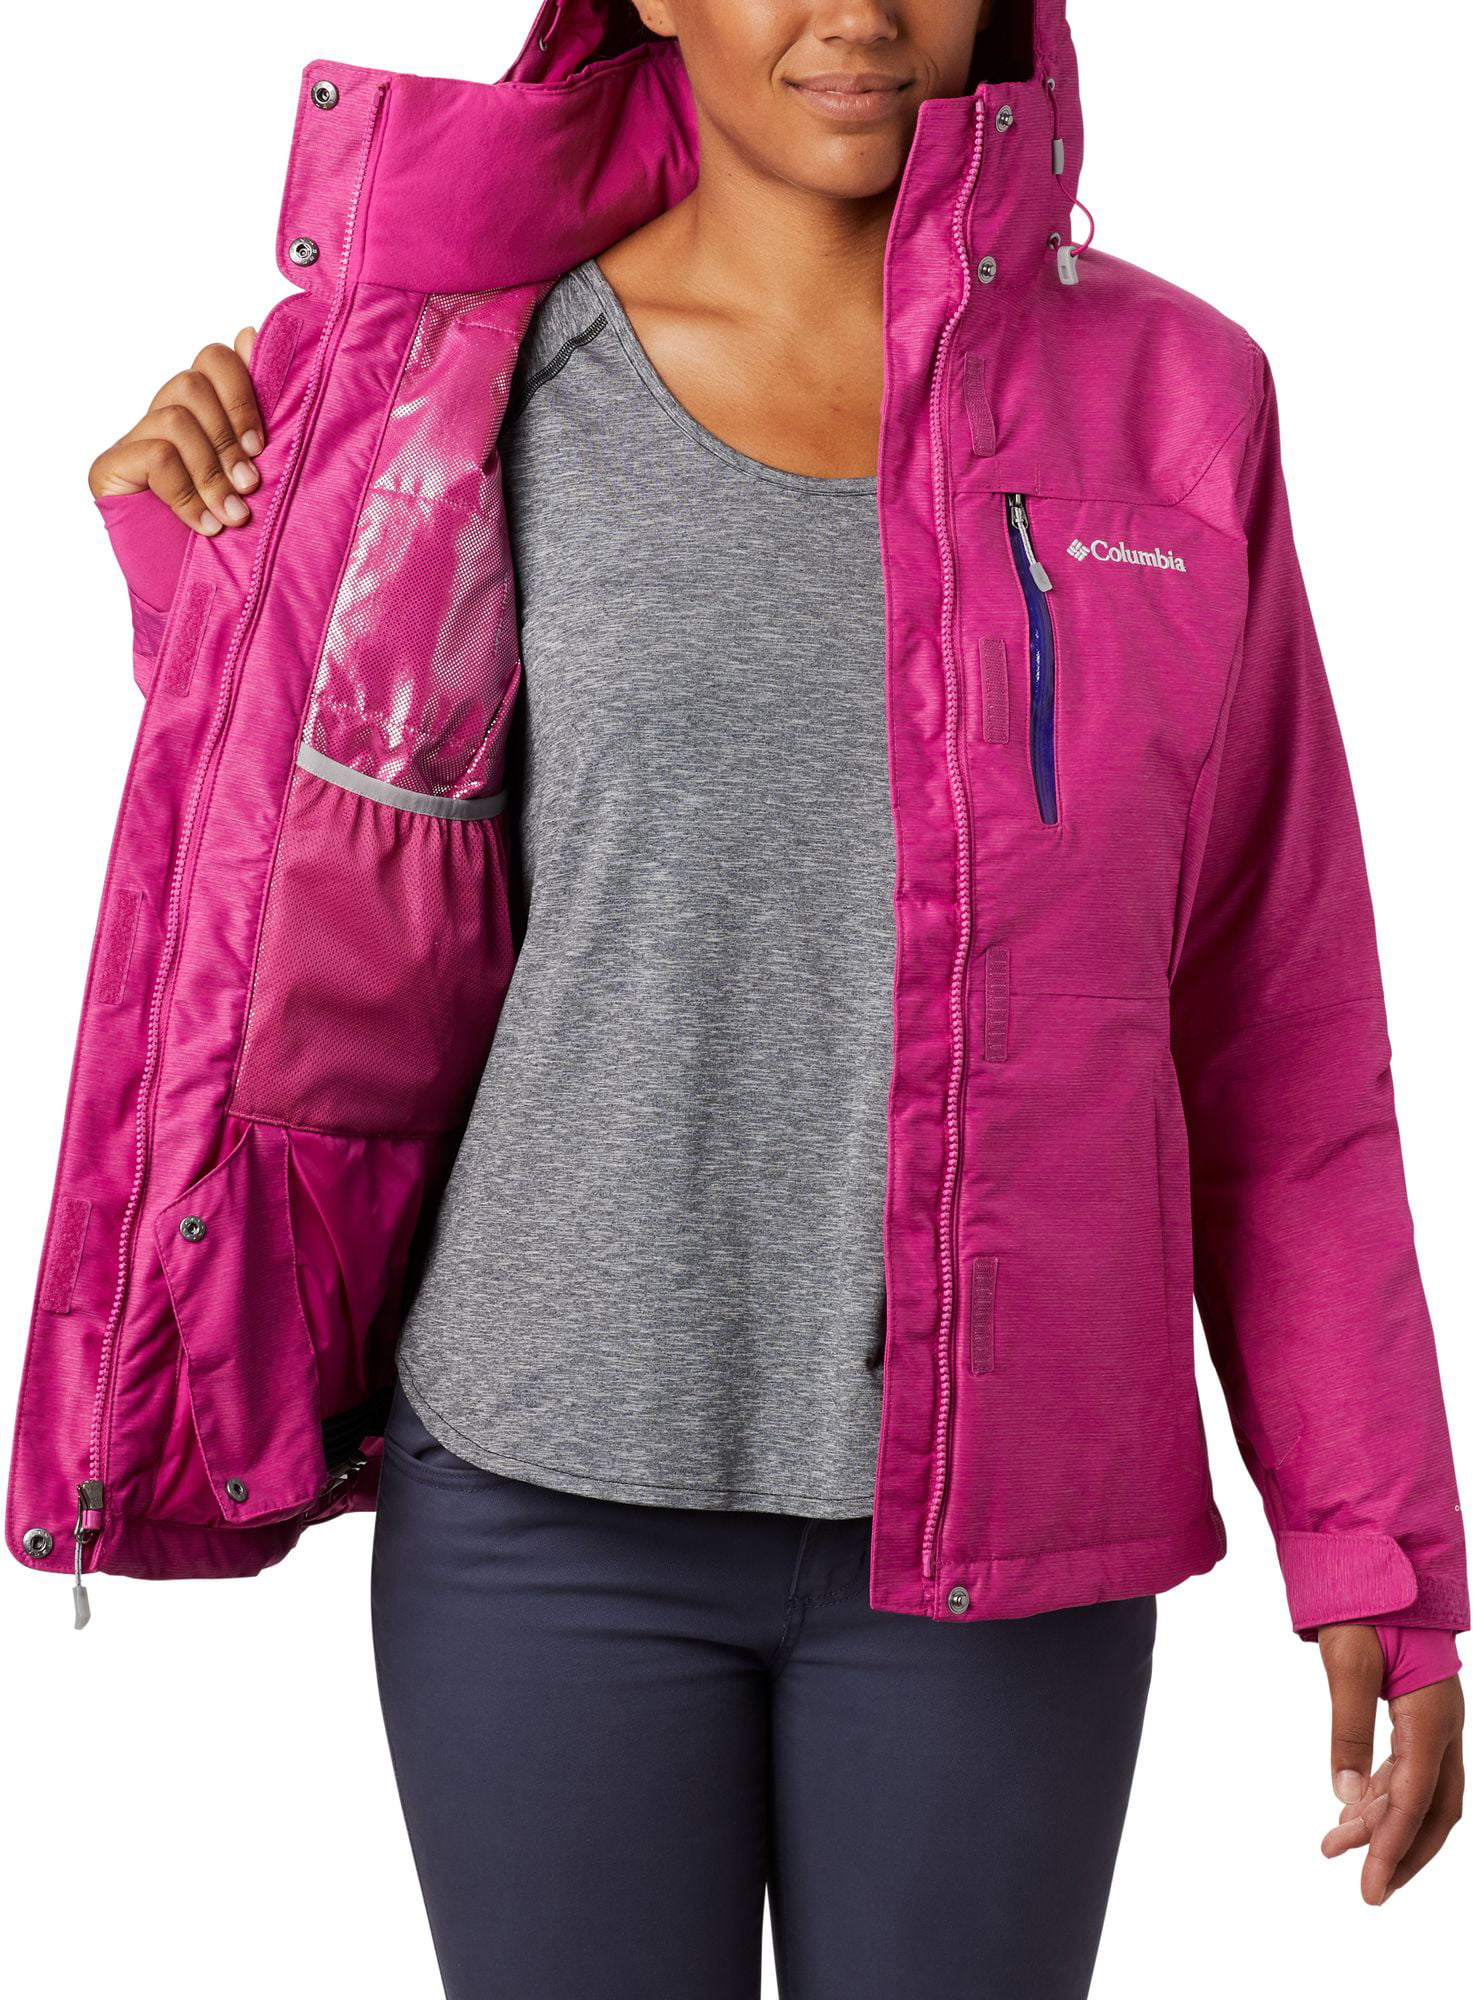 women's alpine action jacket